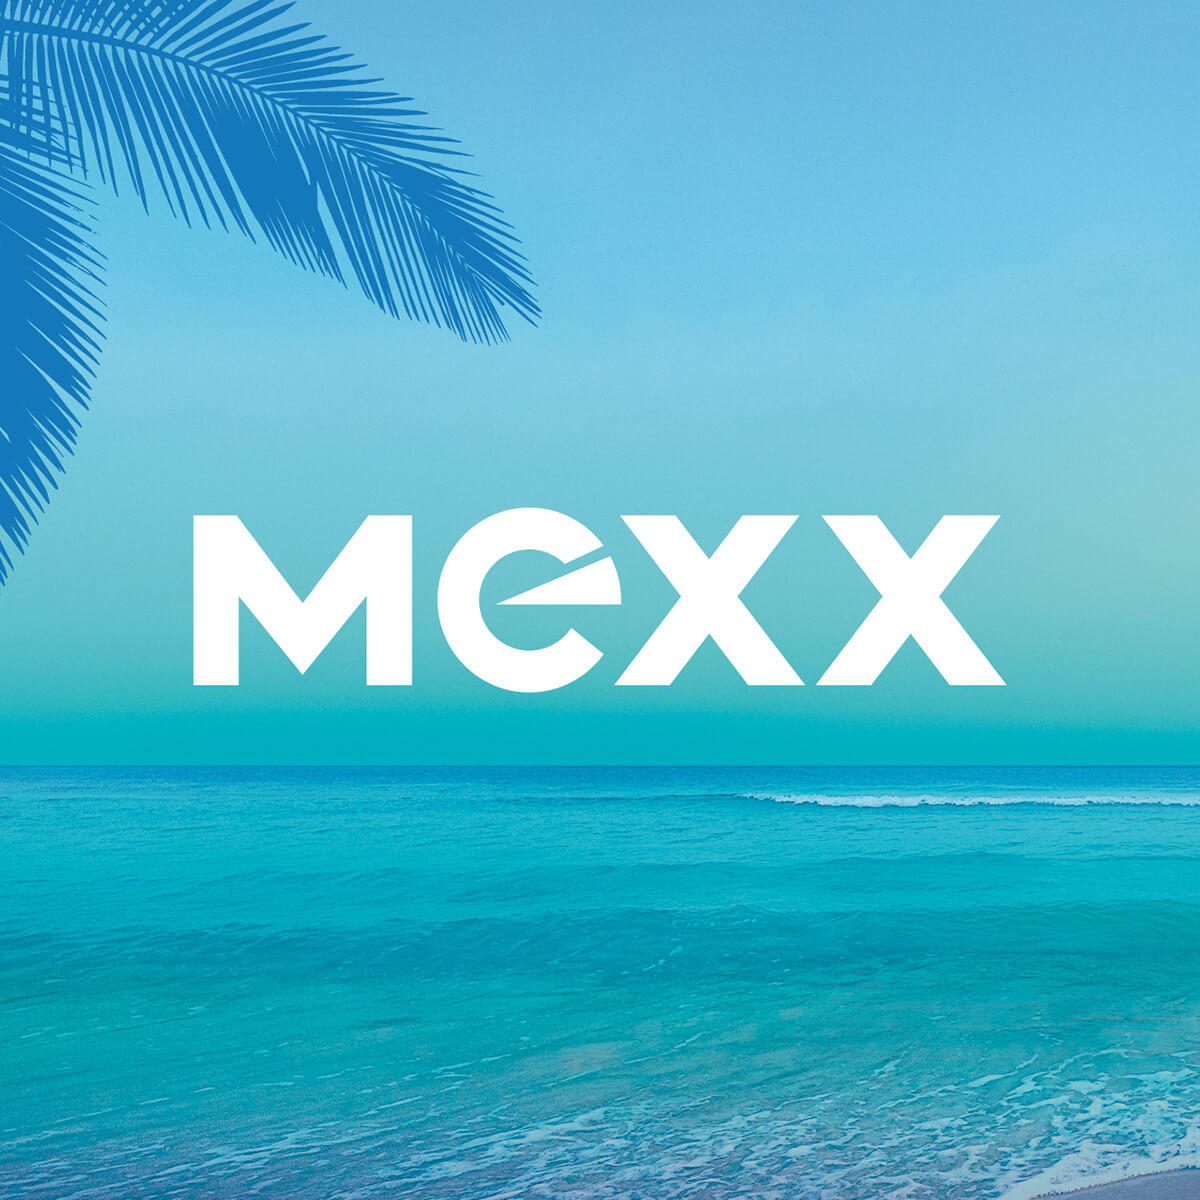 Mexx Summer Holiday